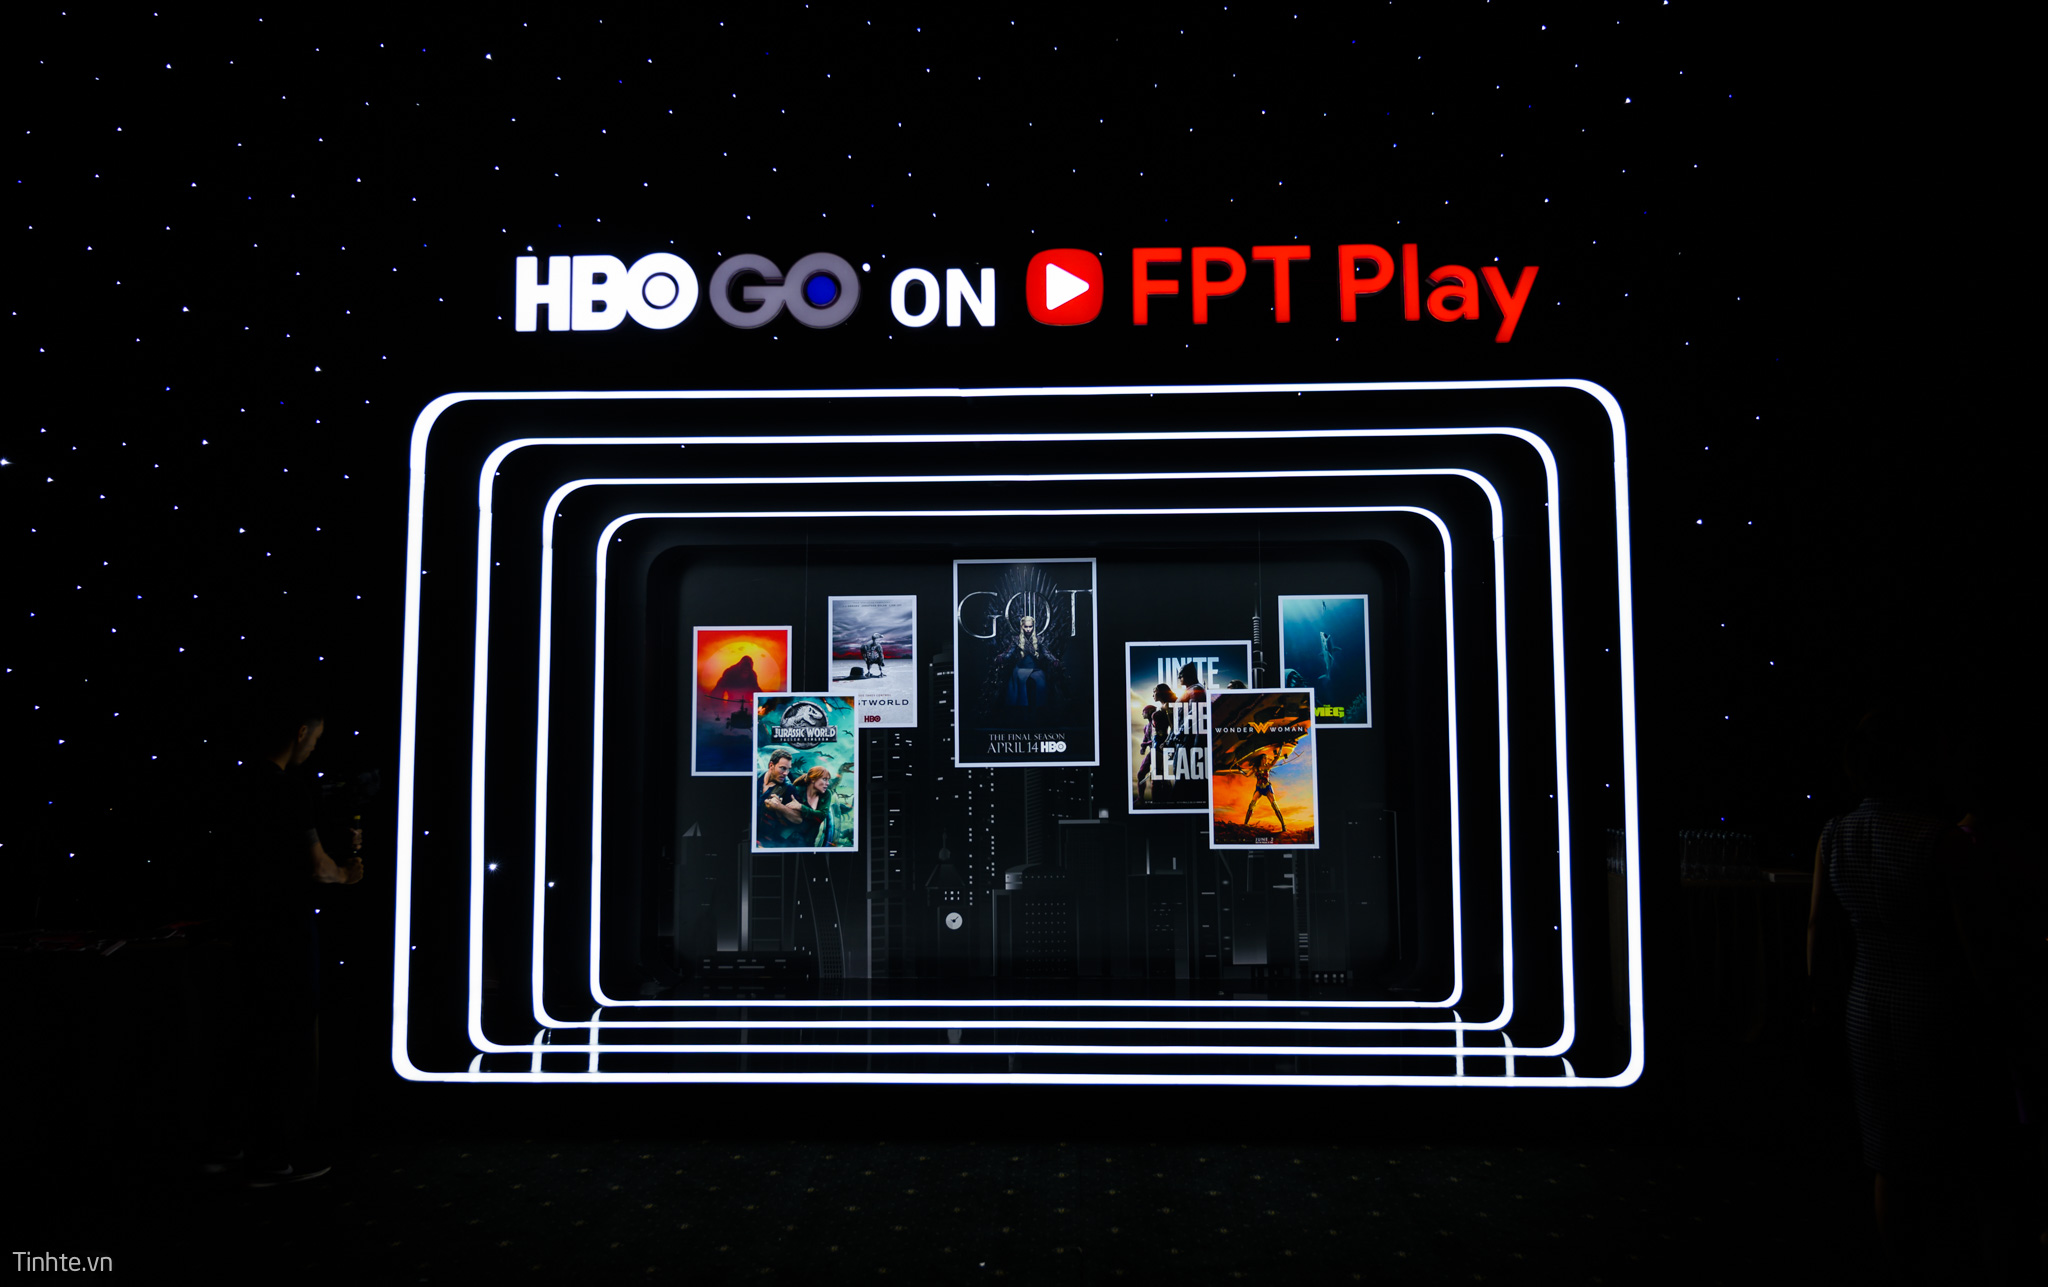 HBO_Go_on_FPT_Play.jpg